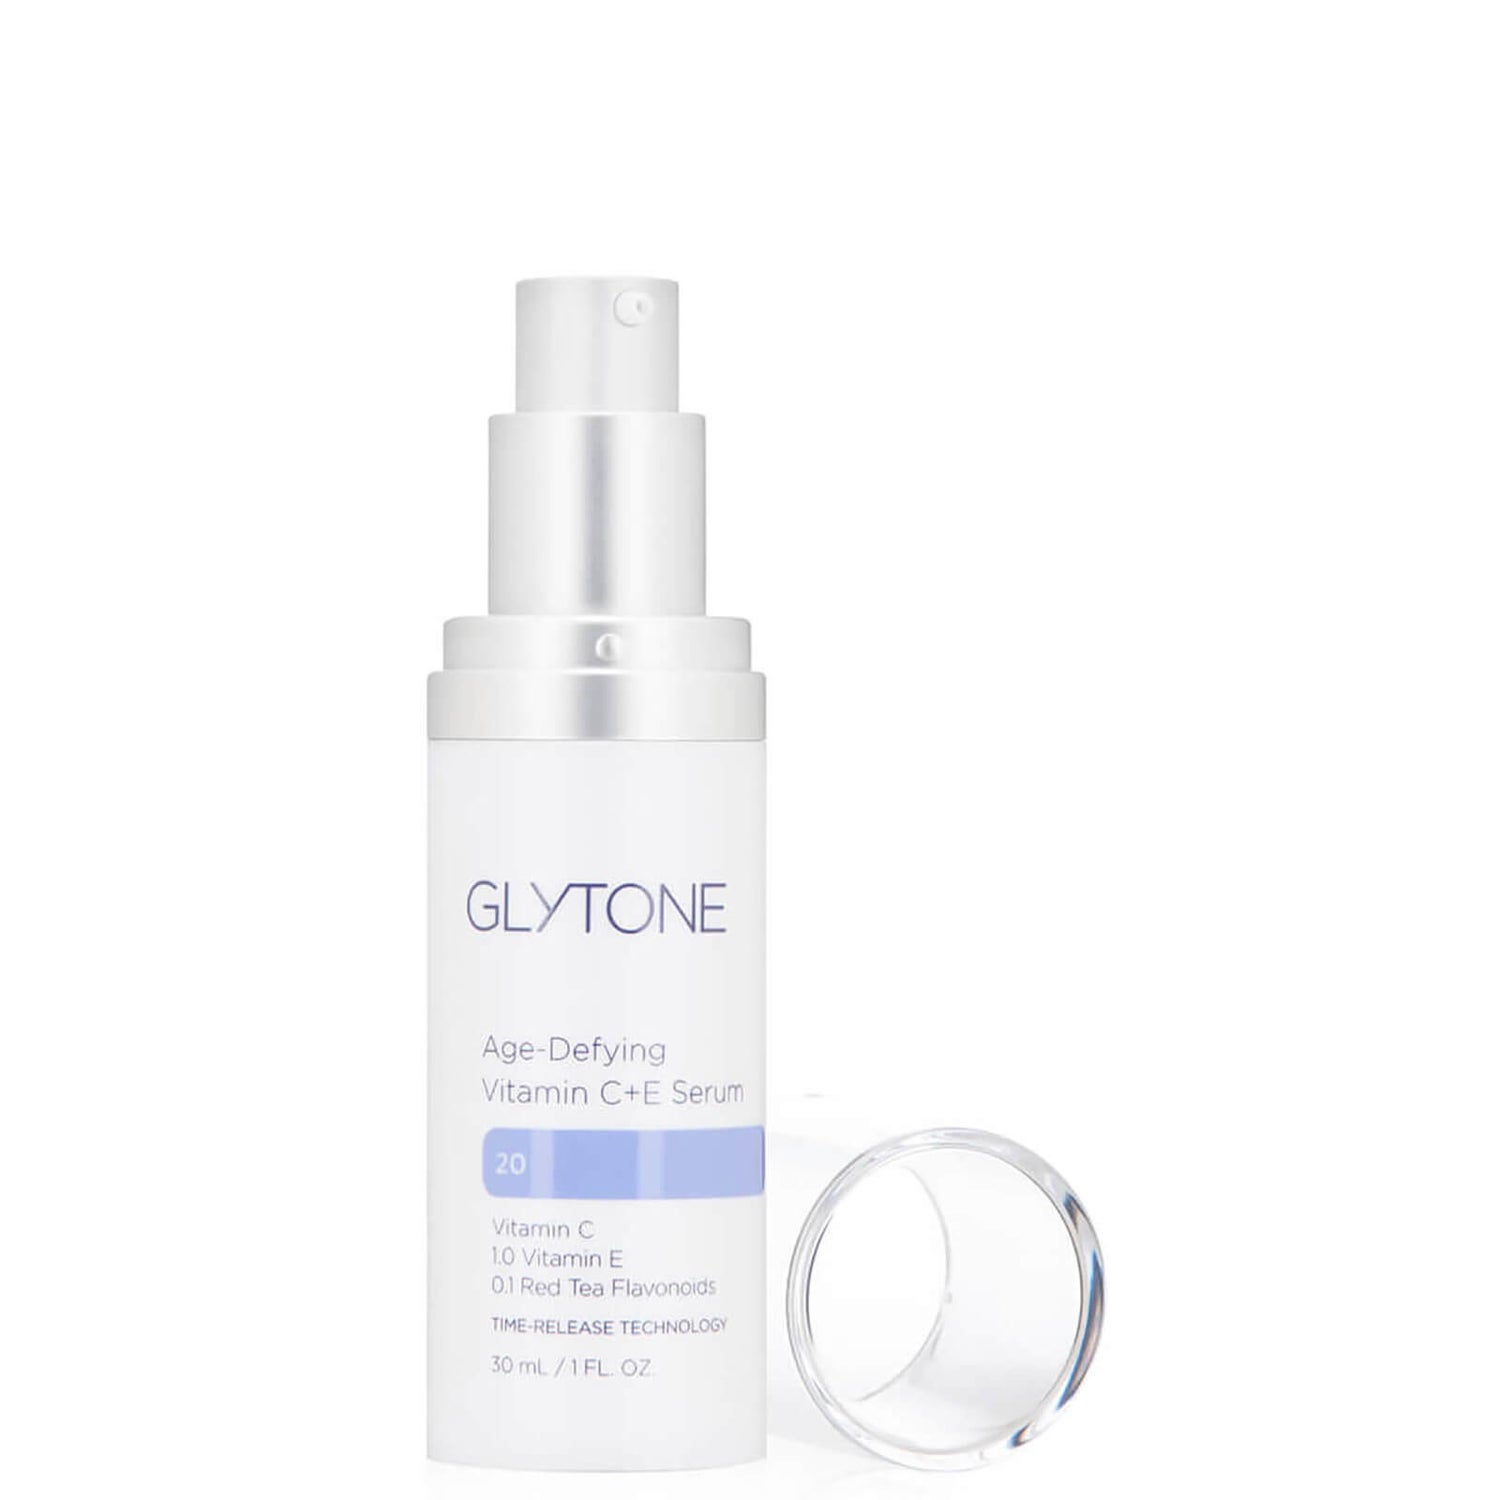 Glytone Age-Defying Vitamin C and E Serum